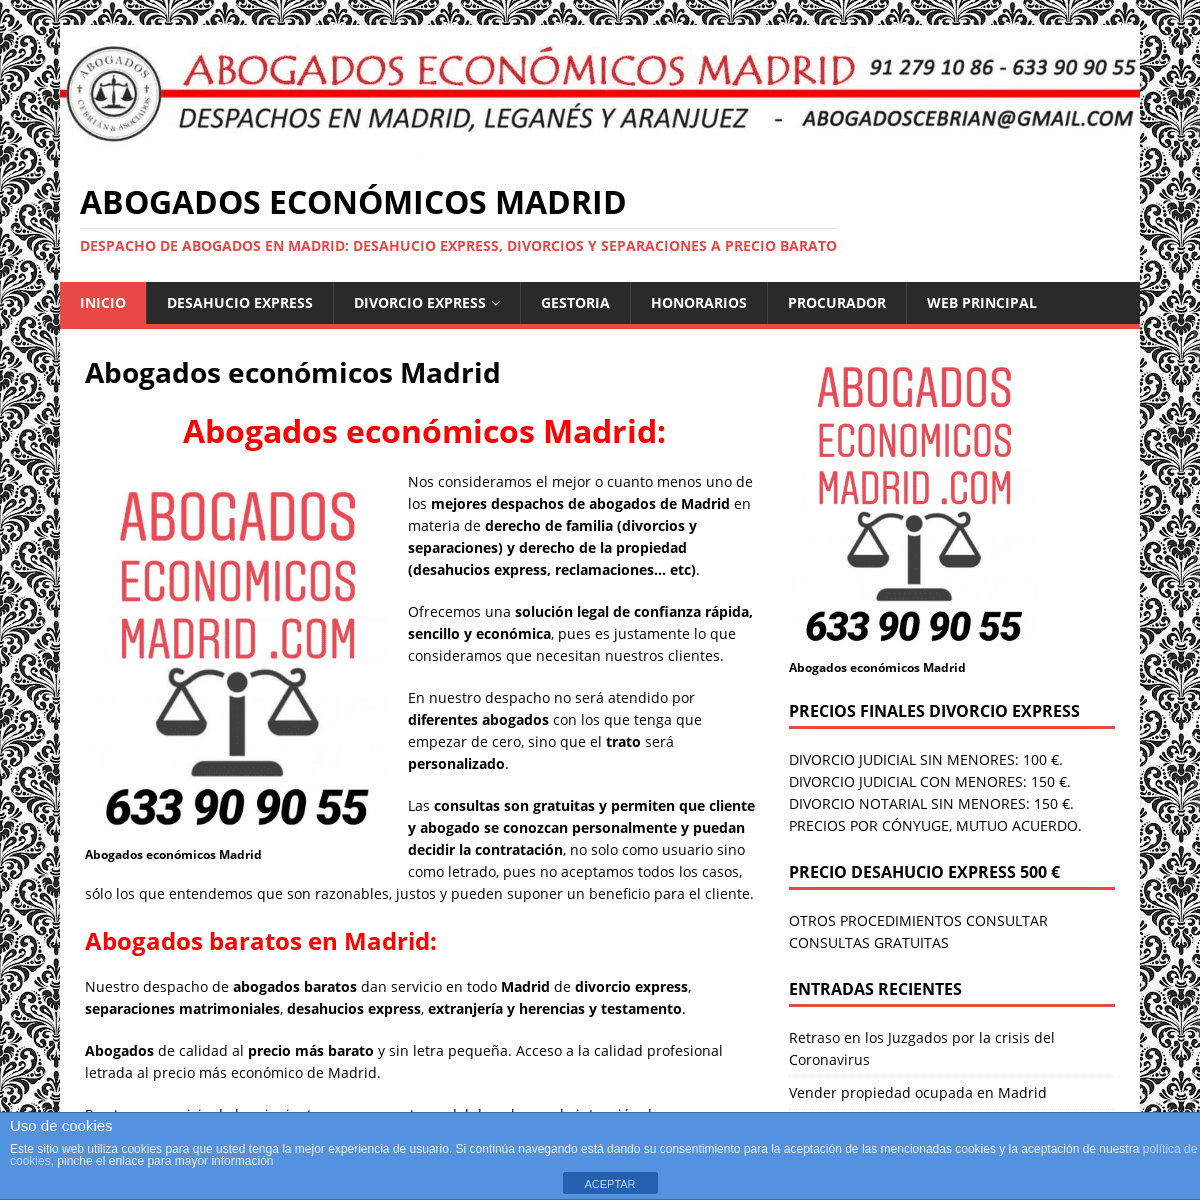 A complete backup of abogadoseconomicosmadrid.com